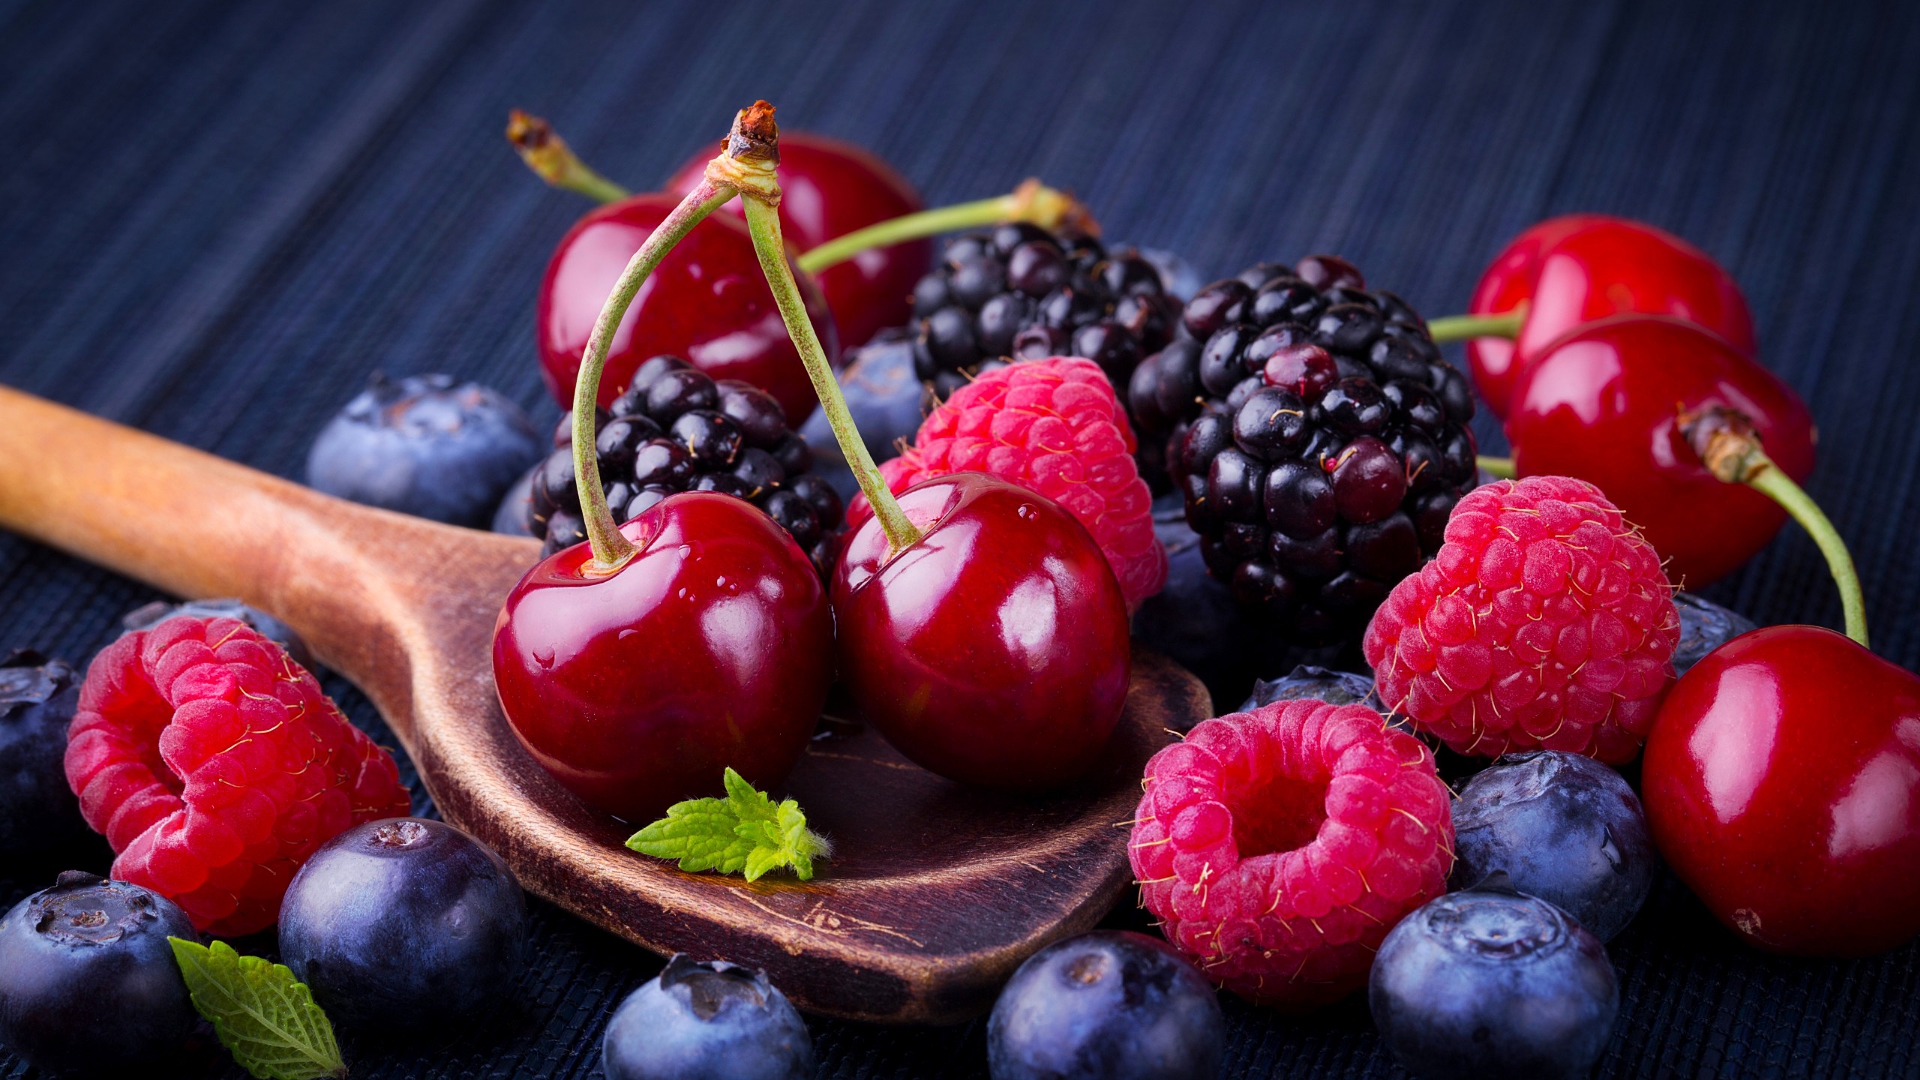 Colorful Photography Fruit Food Still Life Wooden Spoon Blueberries Cherries Blackberries Raspberrie 1920x1080